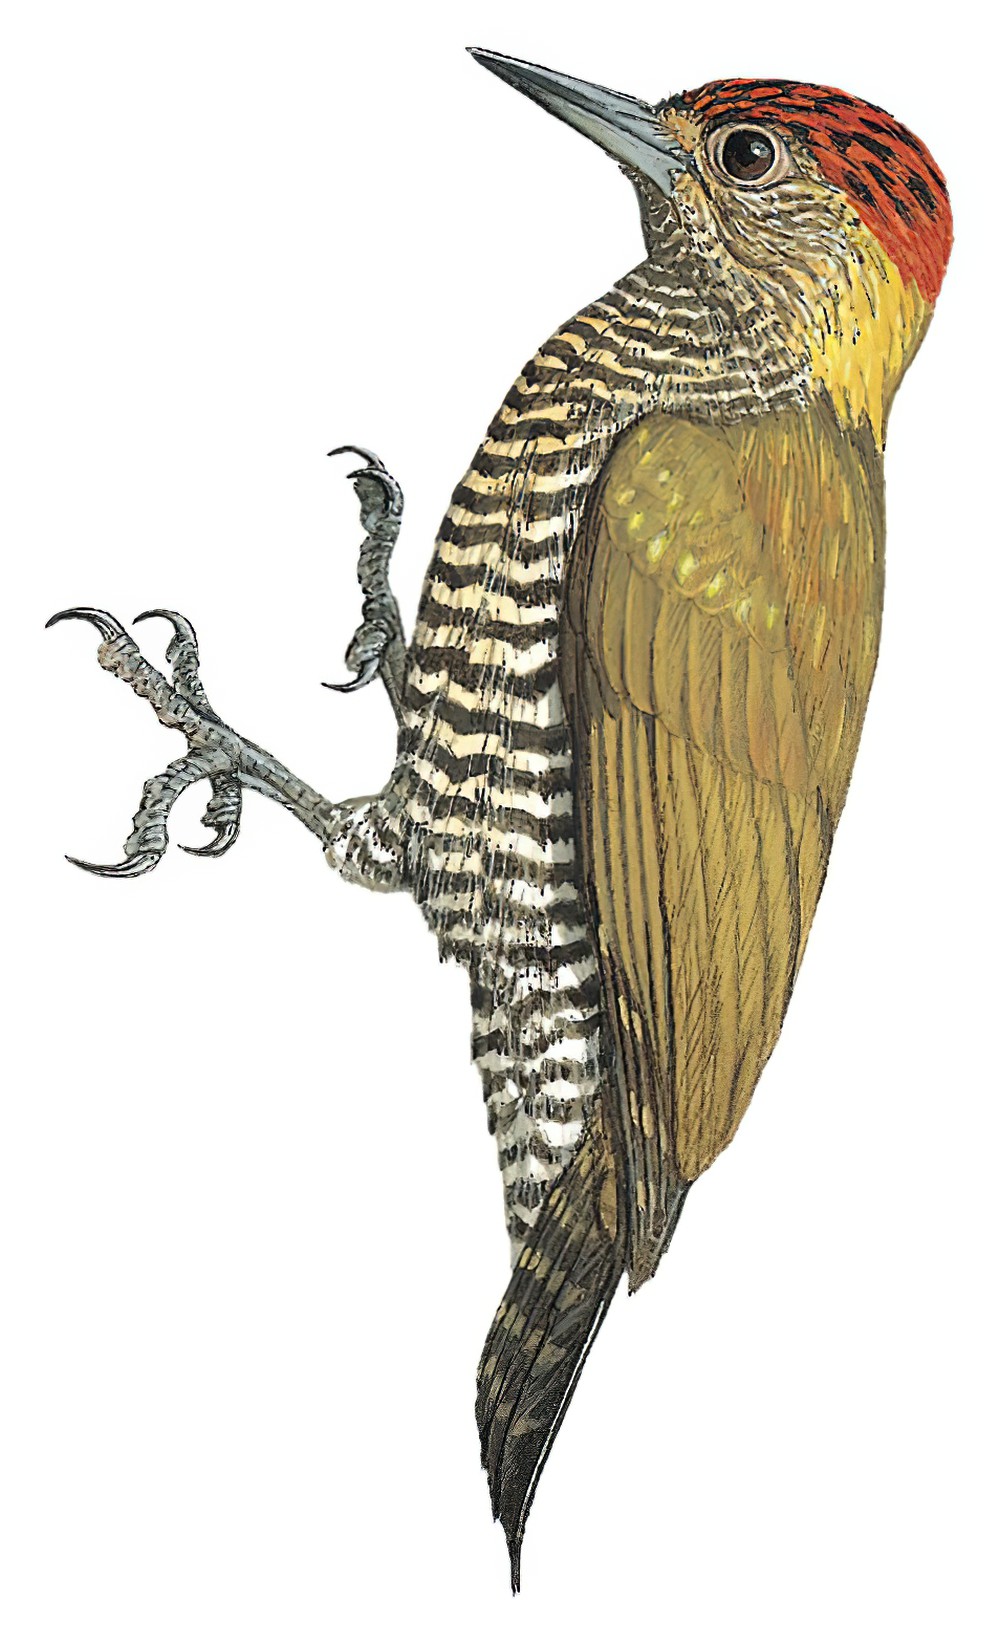 乔科啄木鸟 / Choco Woodpecker / Veniliornis chocoensis